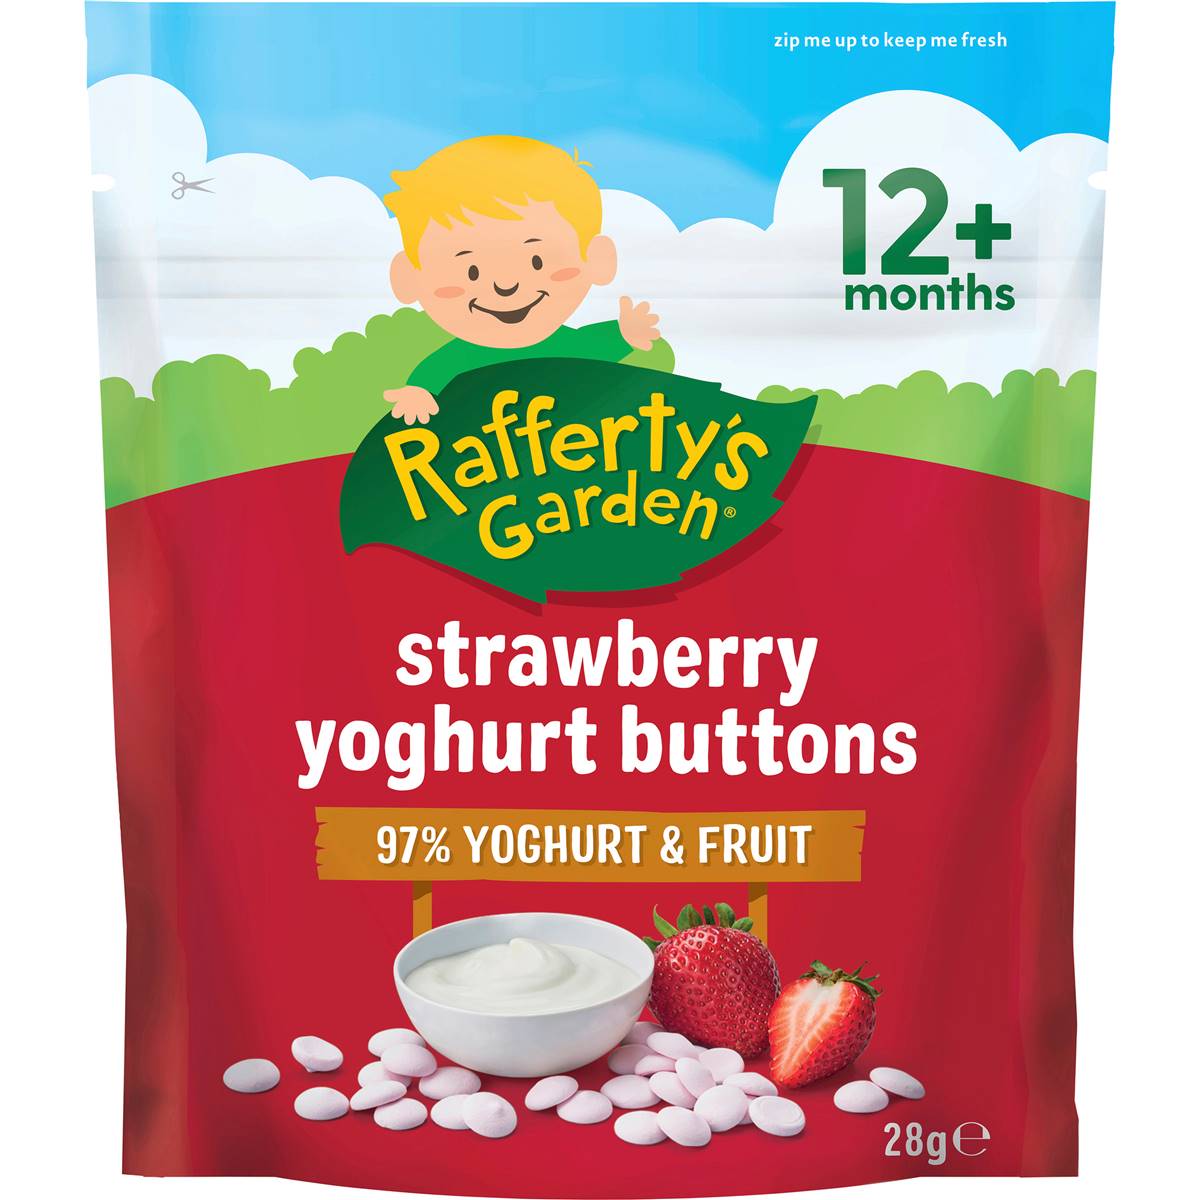 Calories in Rafferty's Garden Baby Food Strawberry Yoghurt Buttons 12+ Months